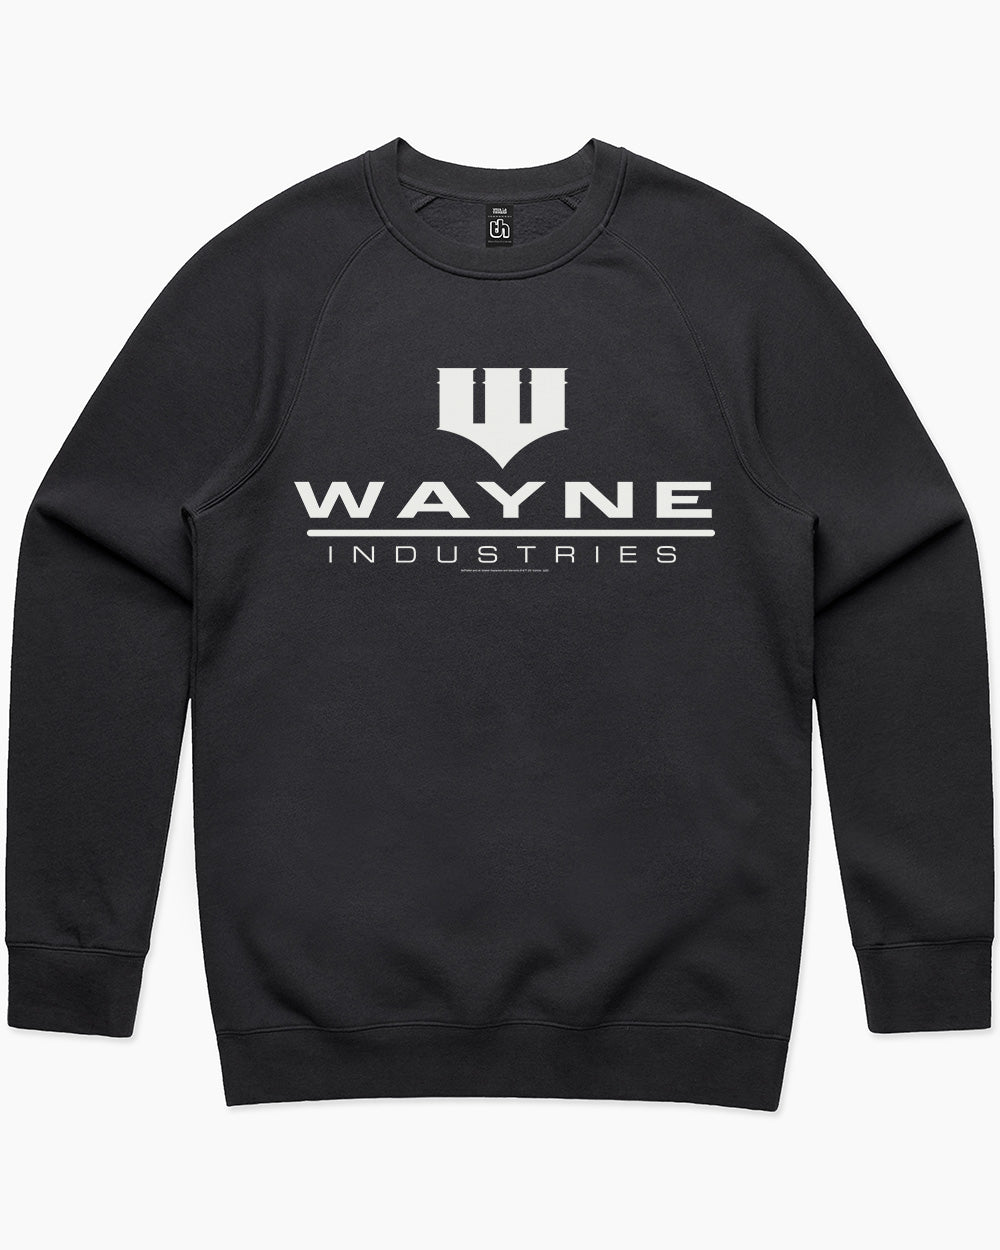 Wayne Industries Sweater Australia Online #colour_black